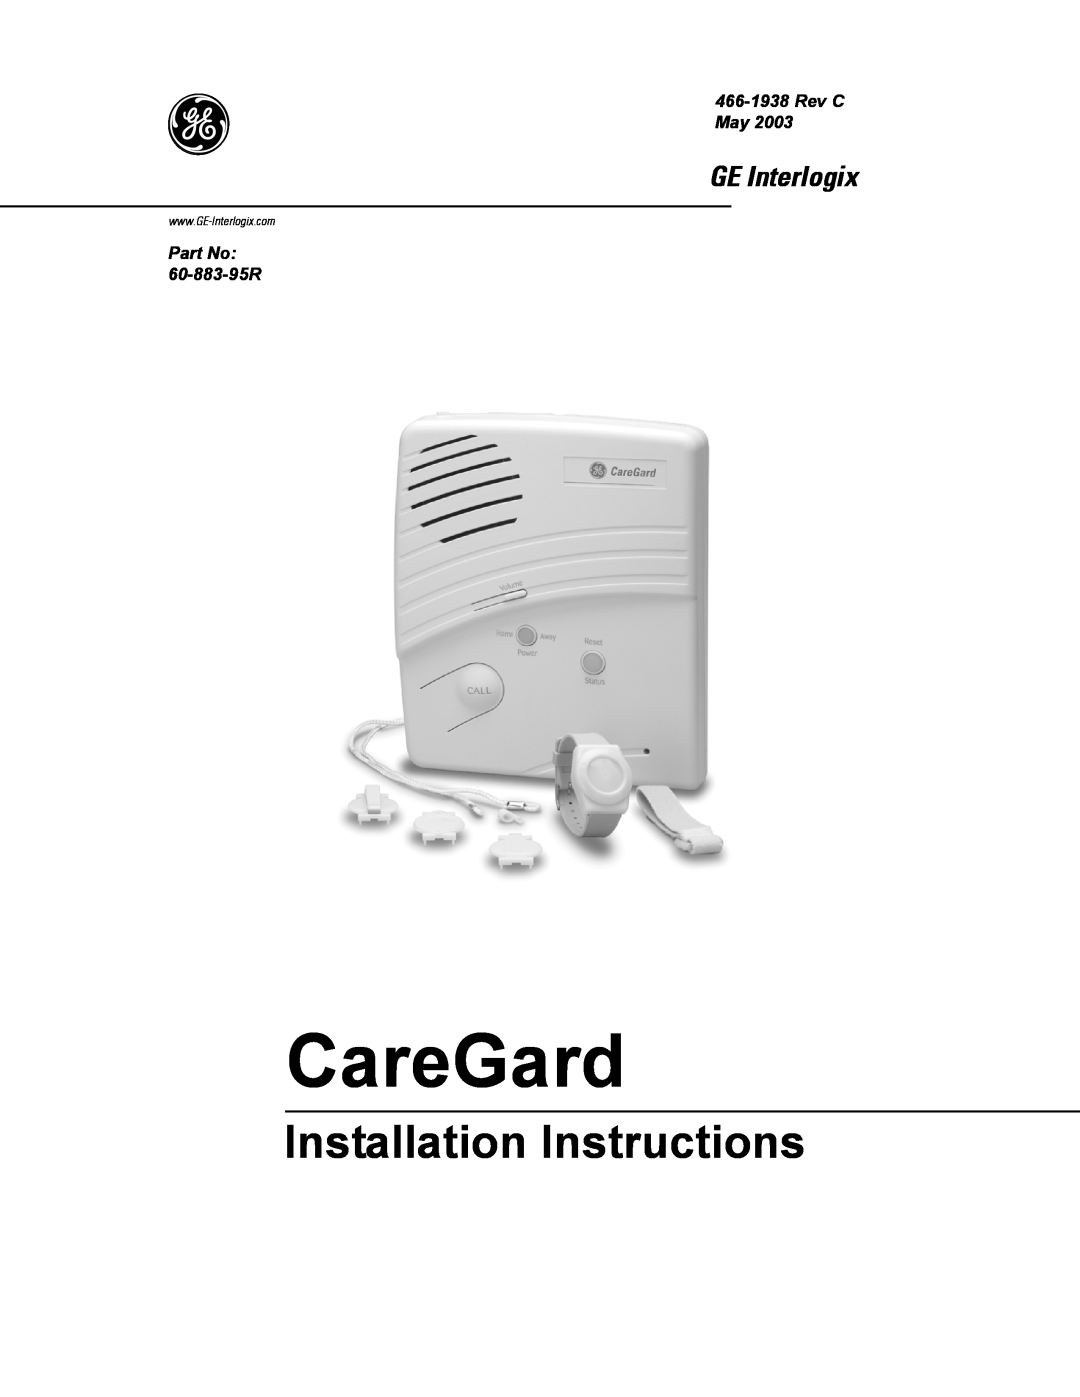 GE 60-883-95R installation instructions CareGard, Installation Instructions, GE Interlogix, 466-1938Rev C May 